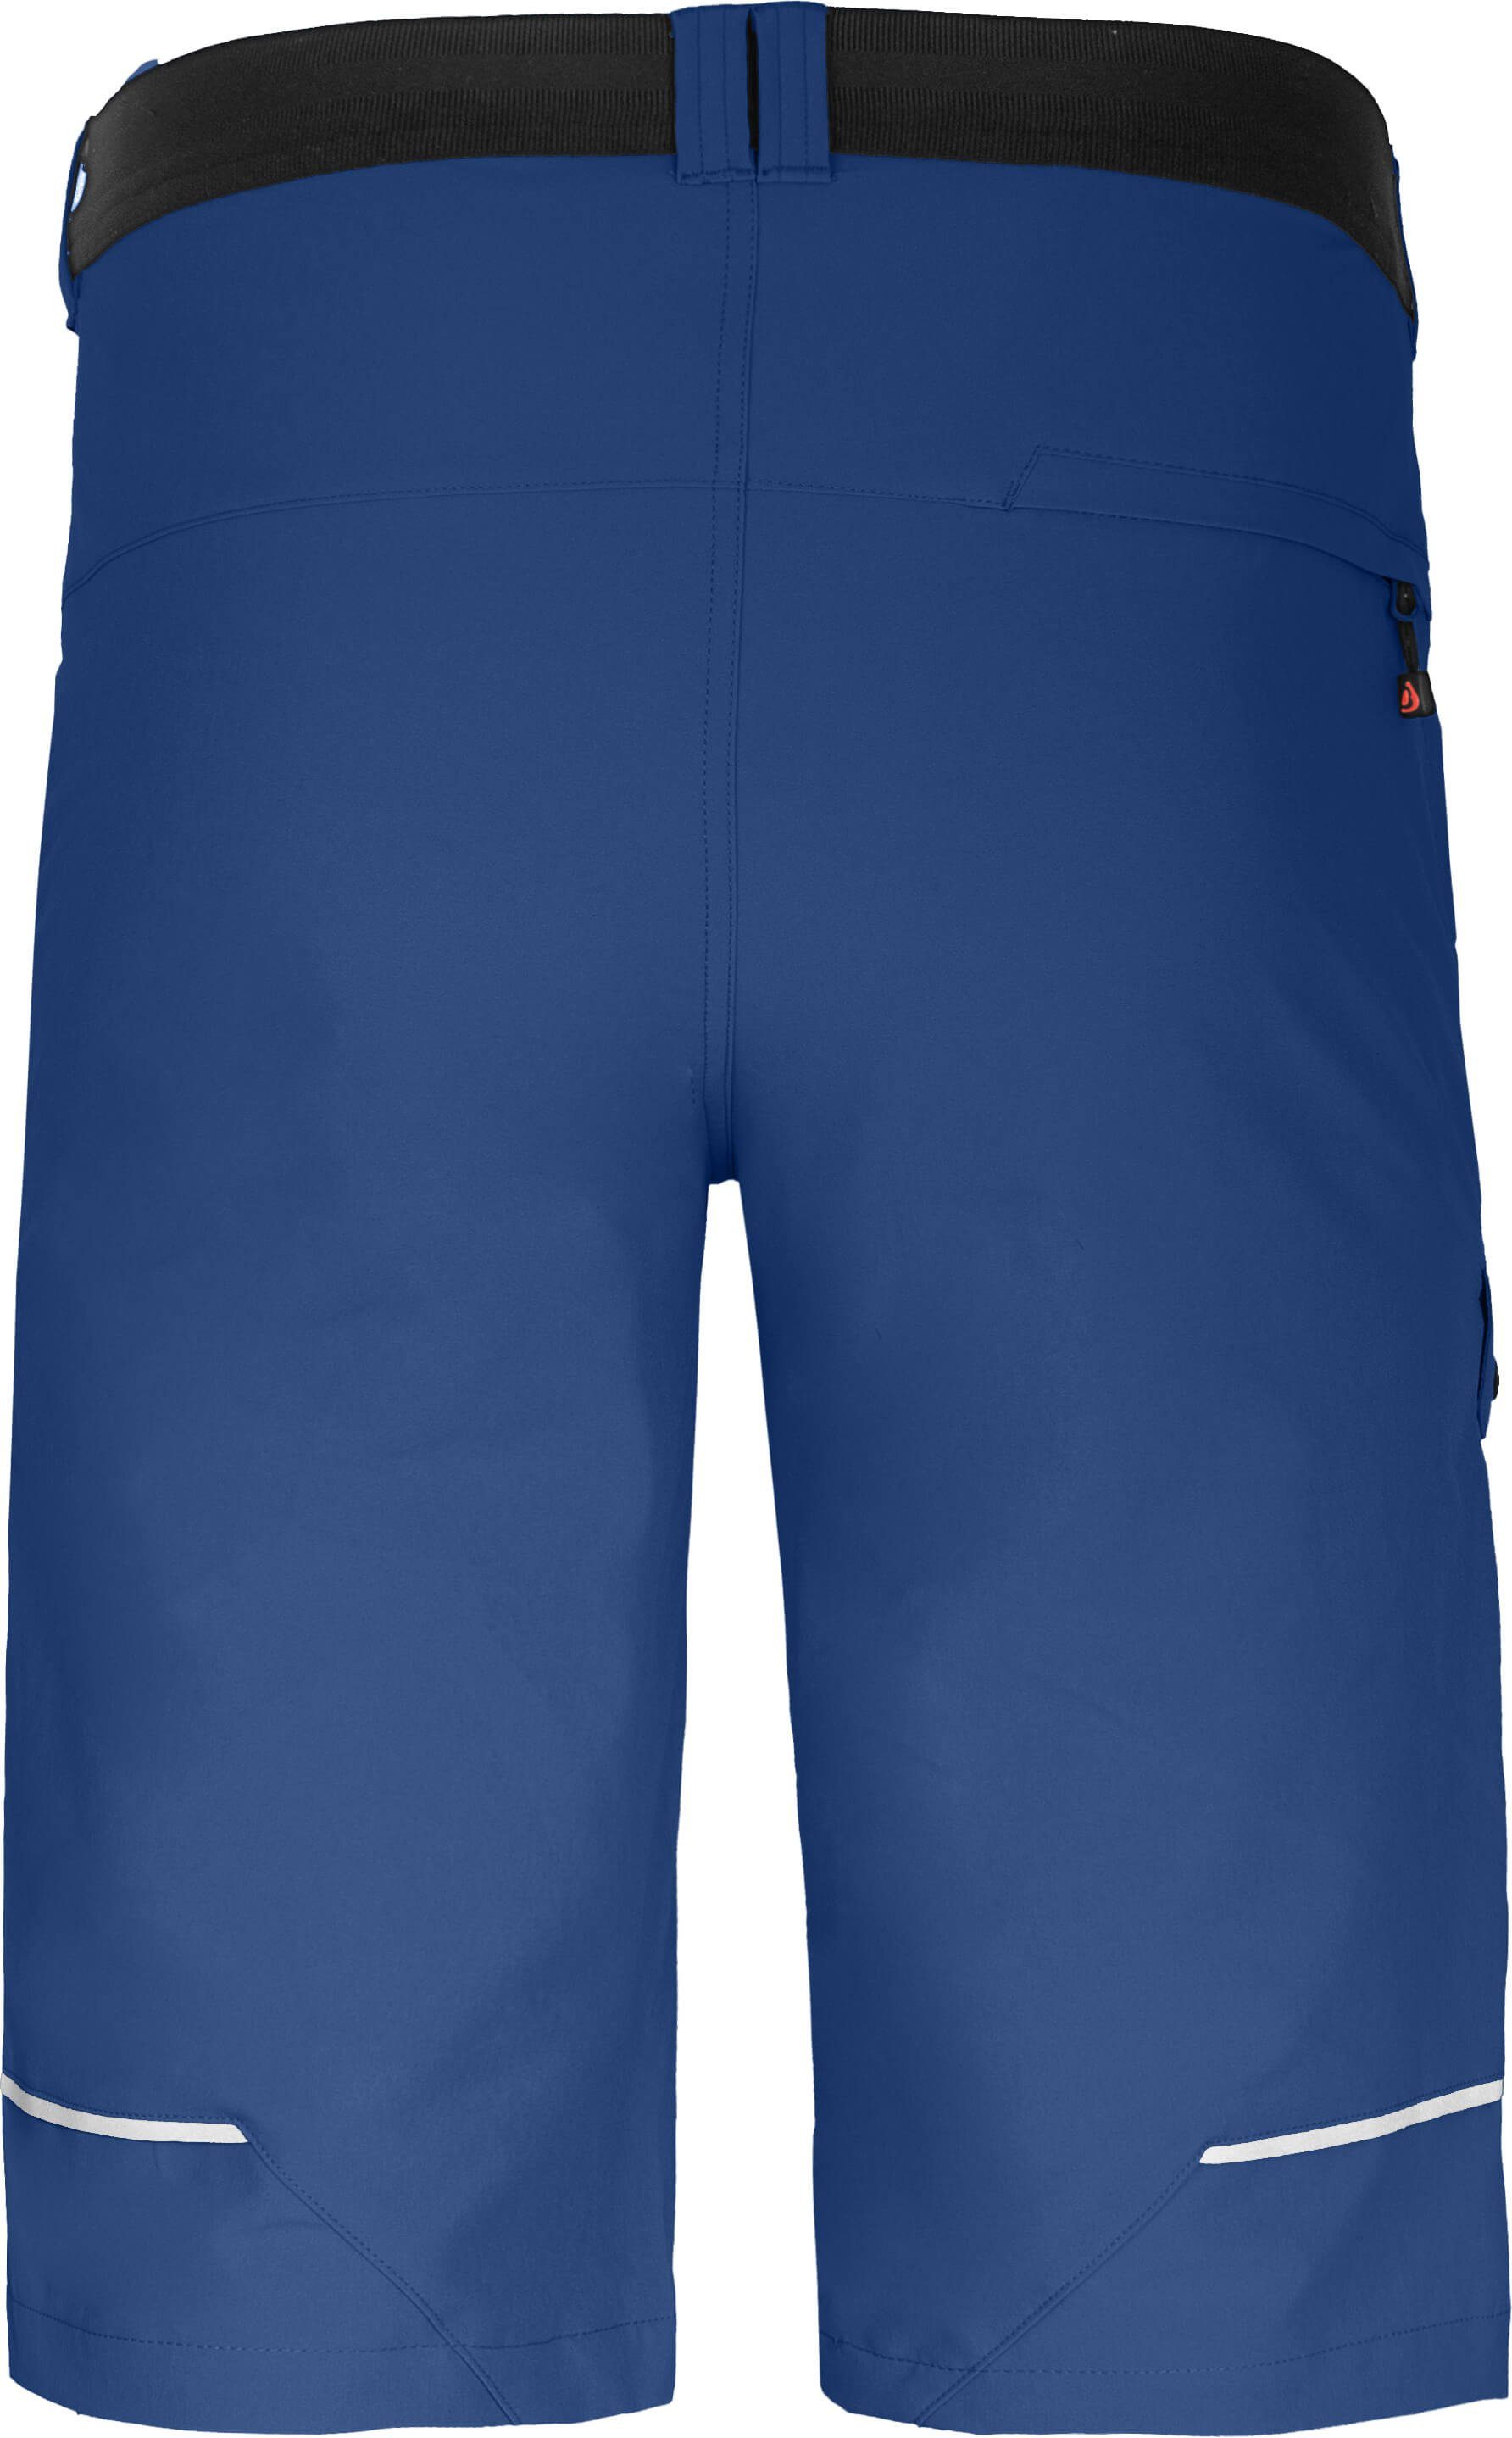 Outdoorhose FROSLEV Taschen, Herren 8 blau COMFORT elastisch, Bergson Bermuda Normalgrößen, Wandershorts, recycelt,